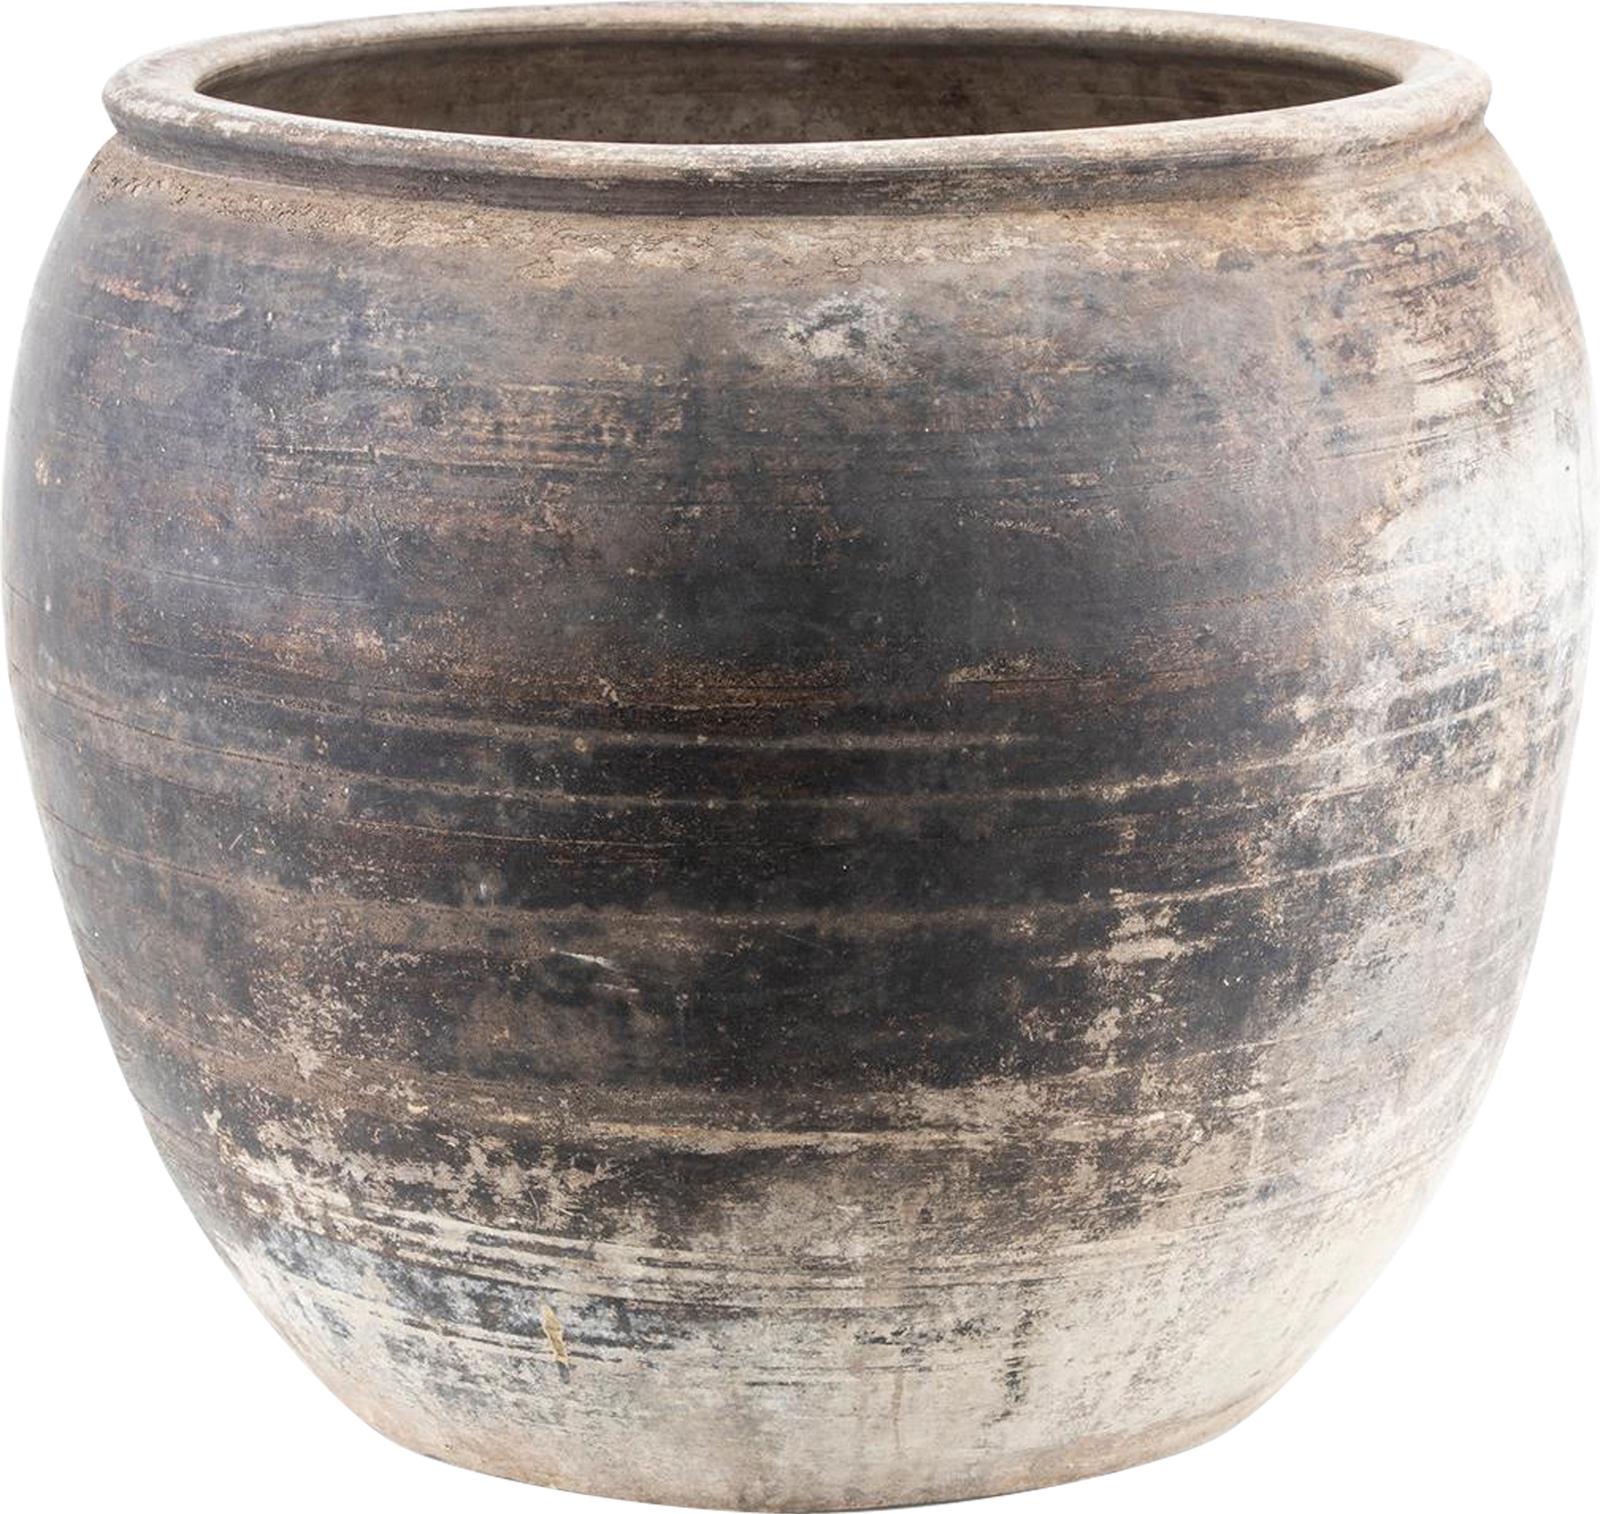 Water Jar Vase Vintage Large Gray Pottery Ceramic Handmade Hand-Cra-Image 5